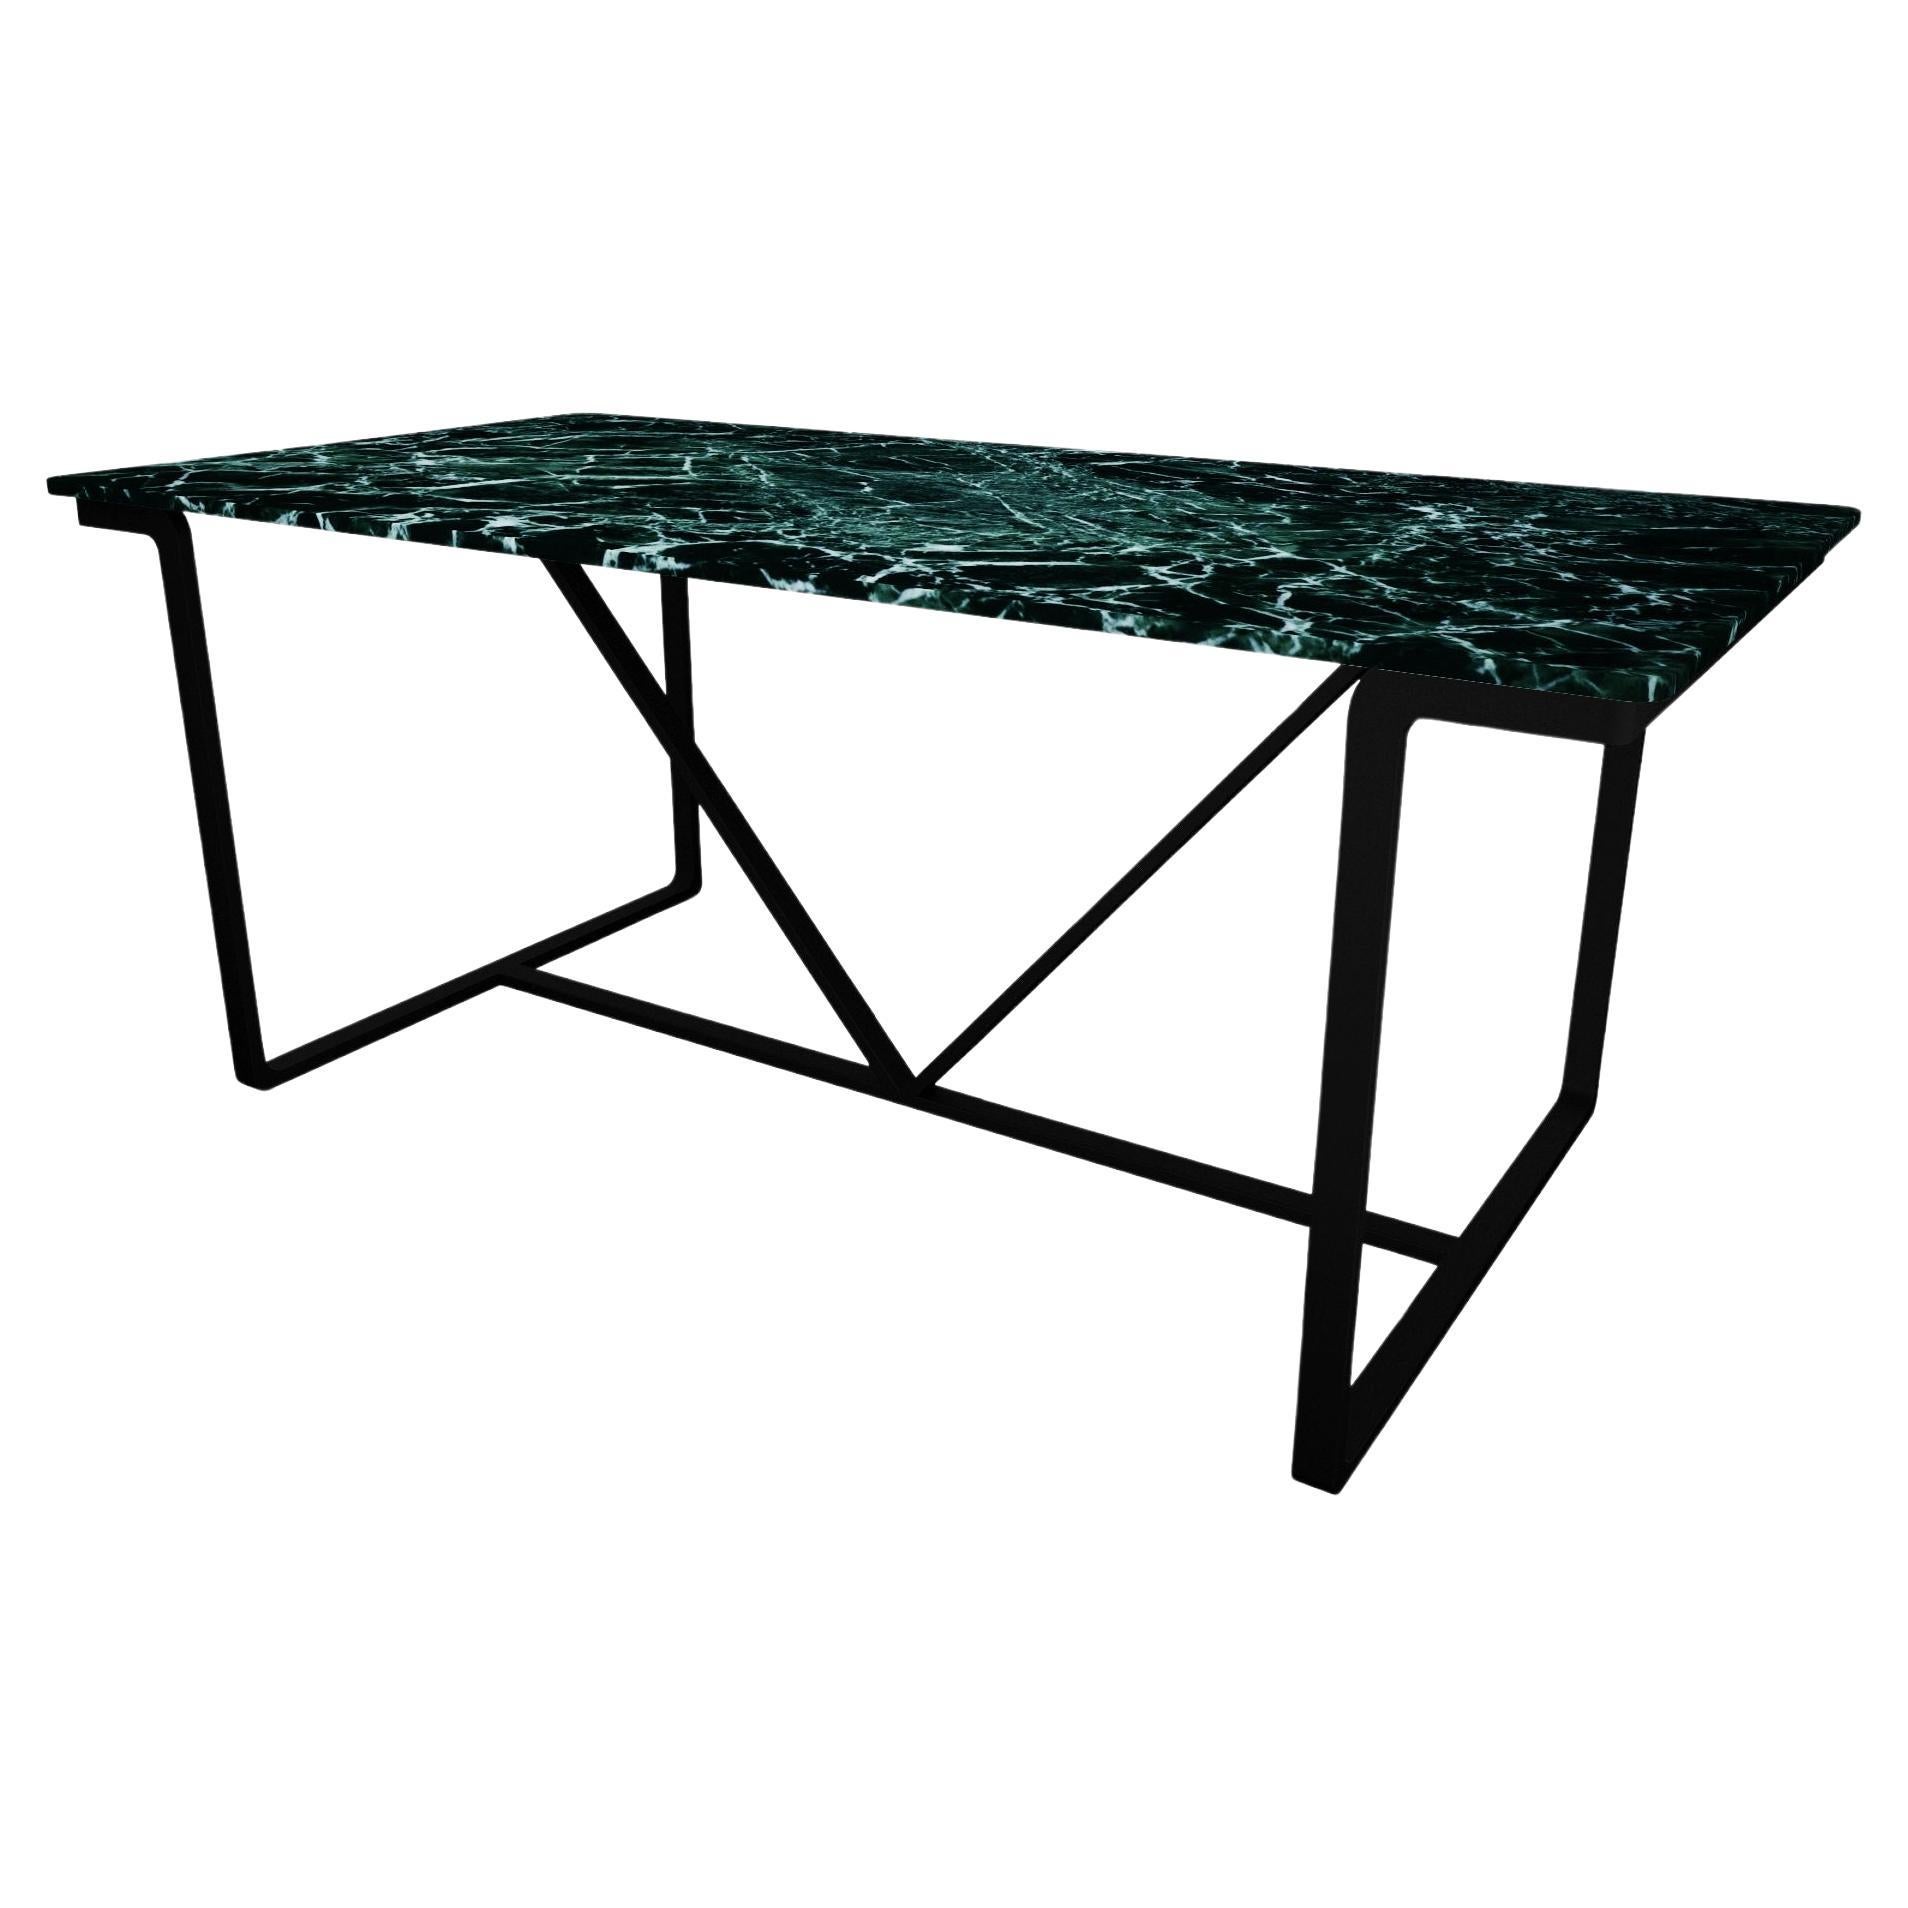 NORDST JERRY Dining Table, Italian Green Lightning Marble, Danish Modern Design For Sale